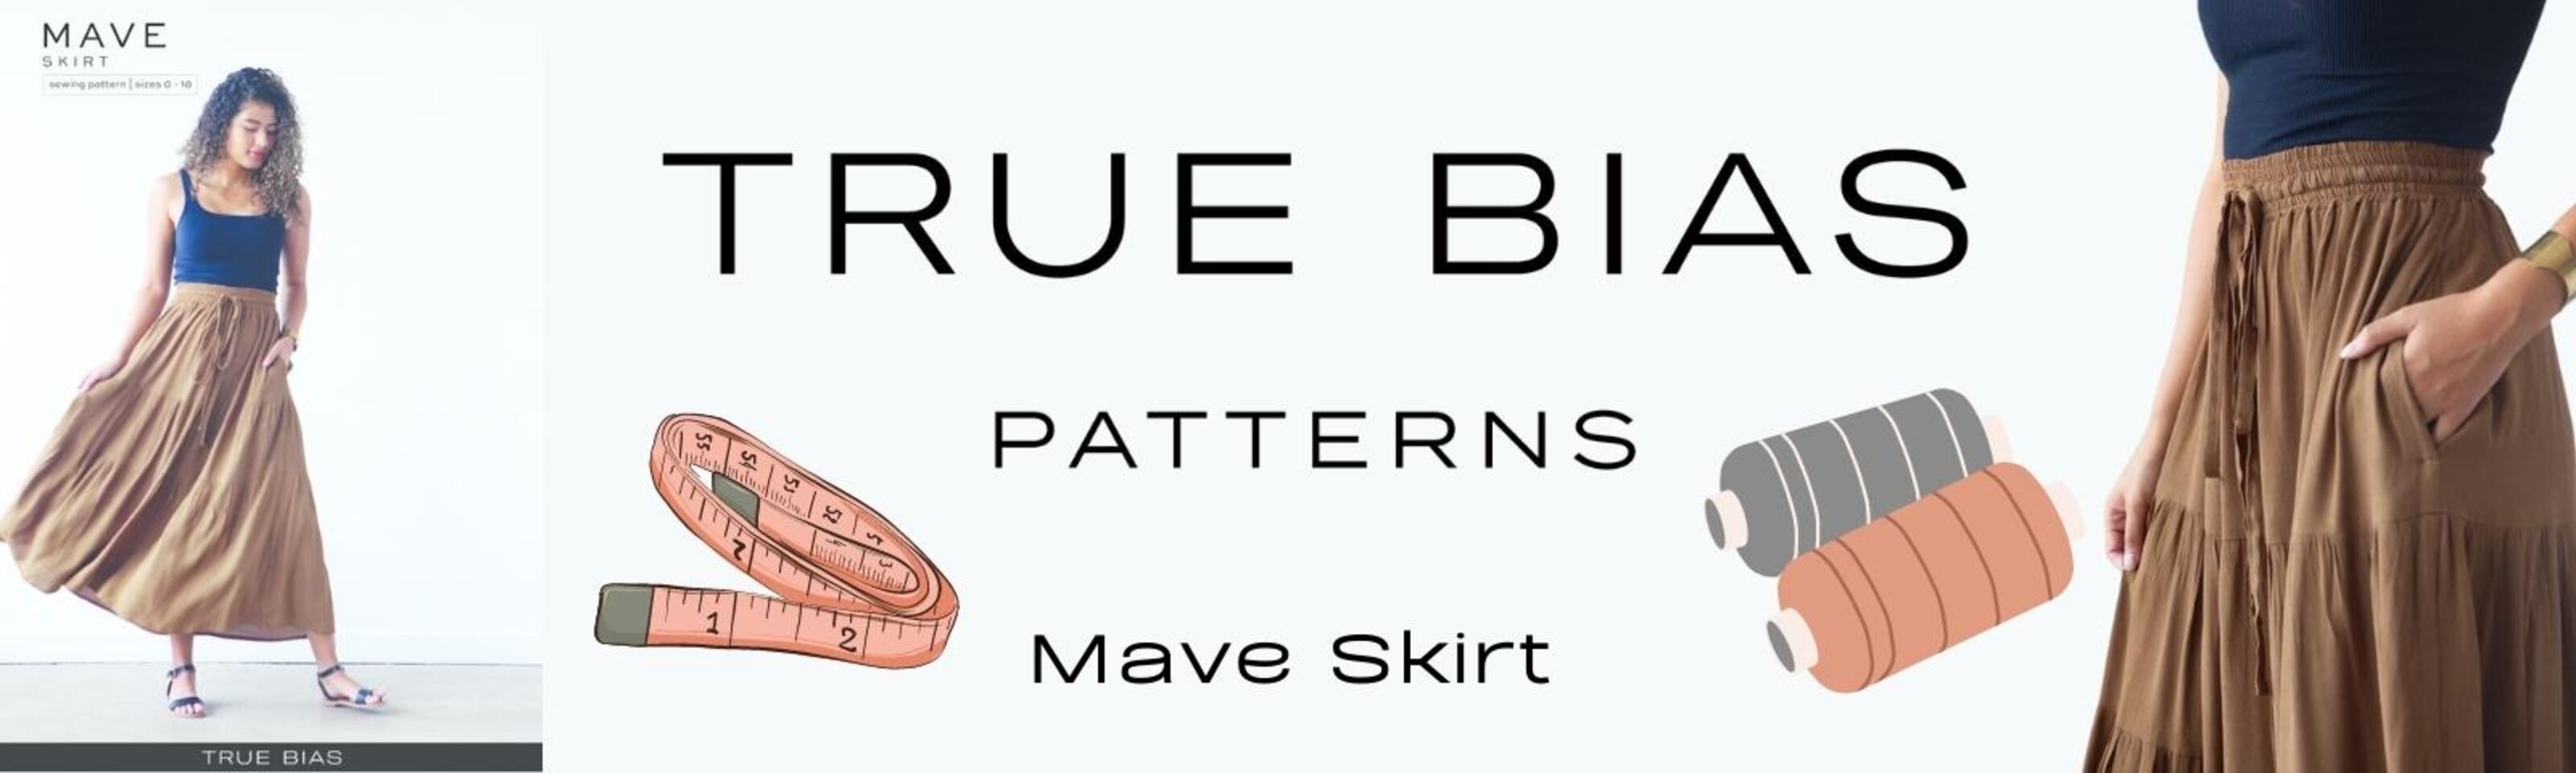 True_Bias_Mave_Skirt_Pattern